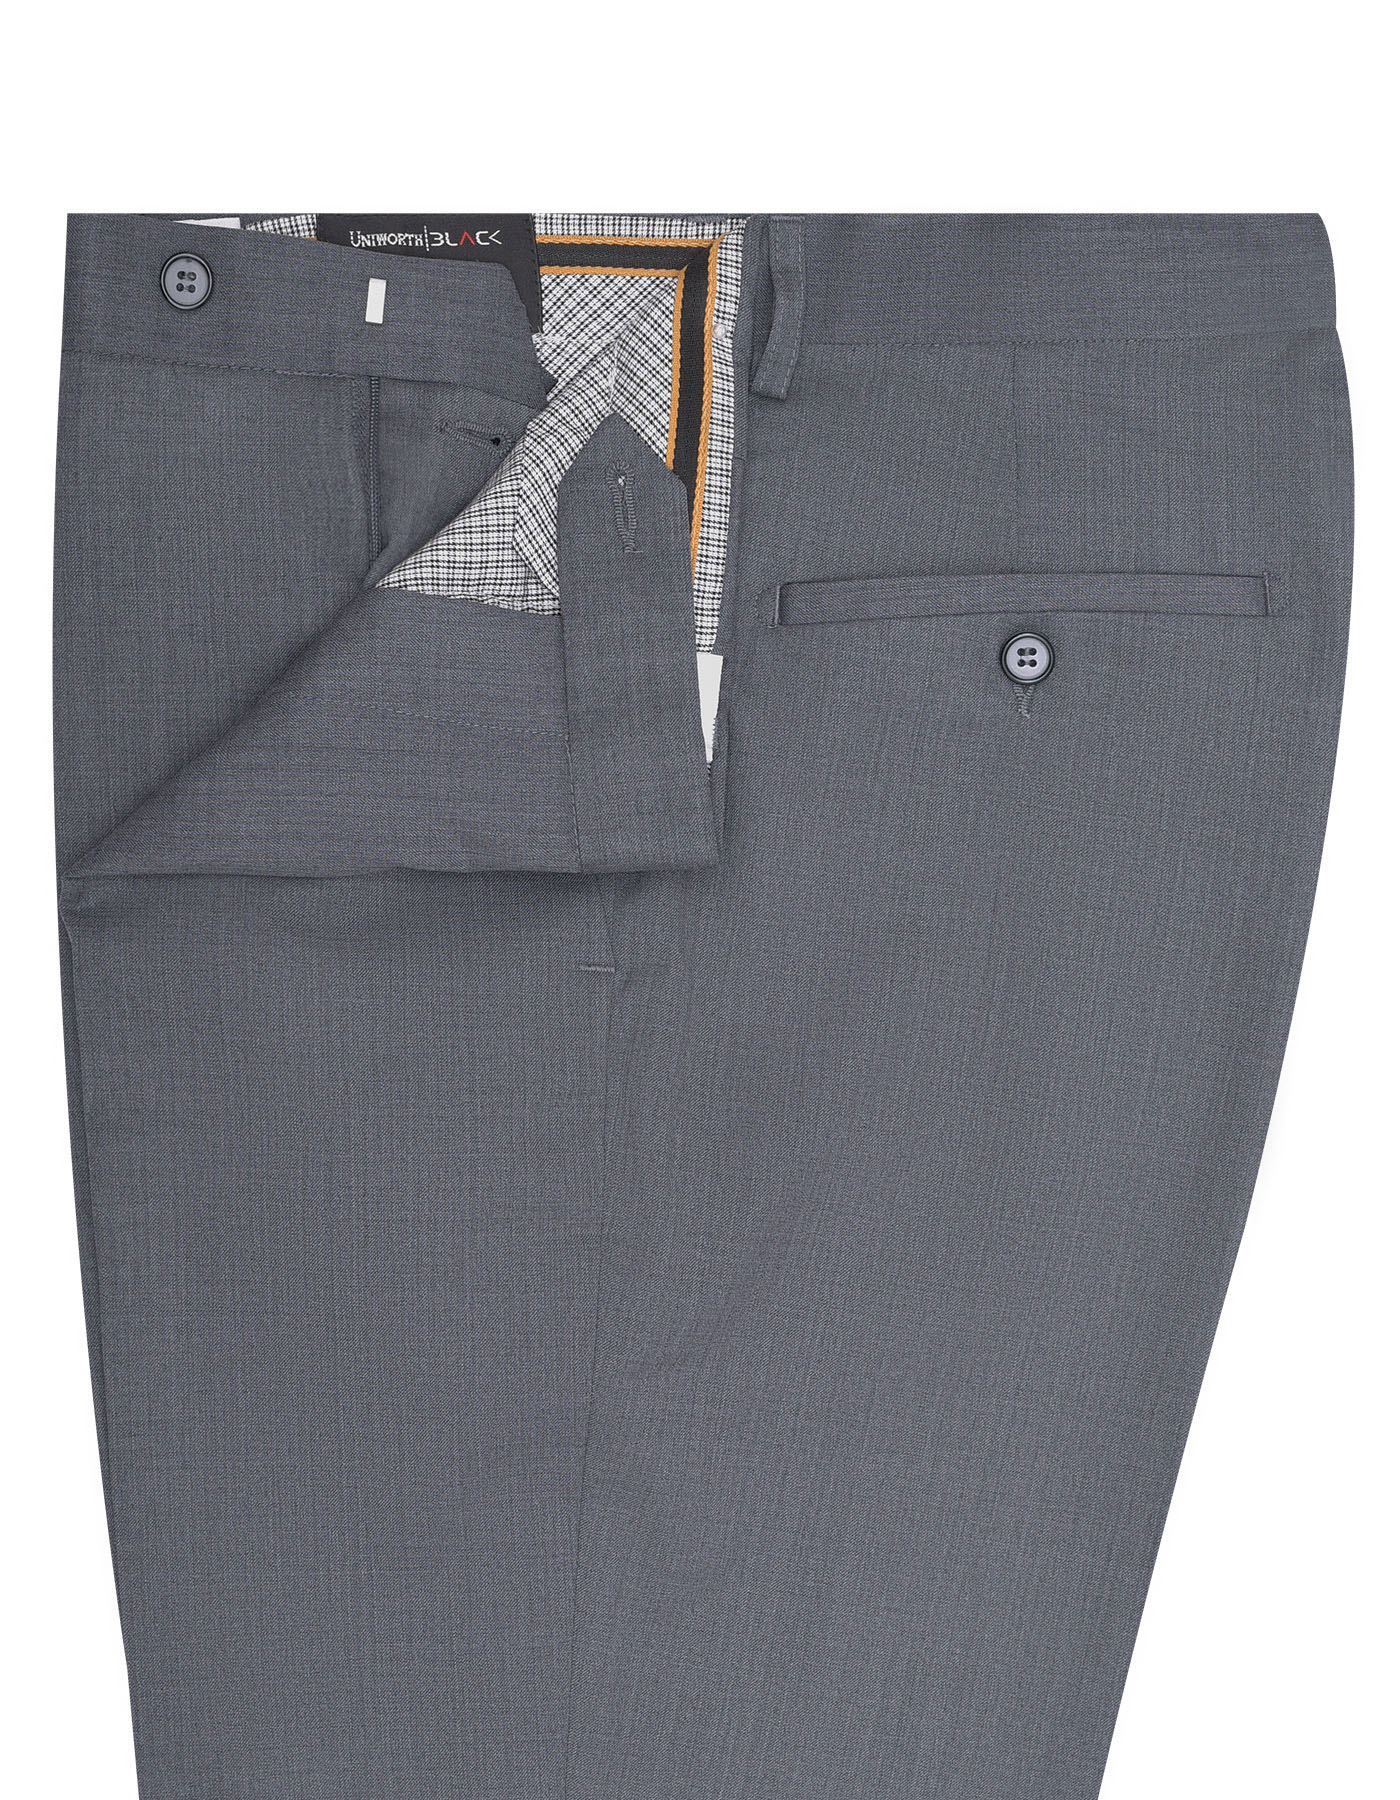 Formal Pants For Men || Formal Pants Wholesale Market in Delhi || Formal  Pant Wholesale Market #K5 - YouTube